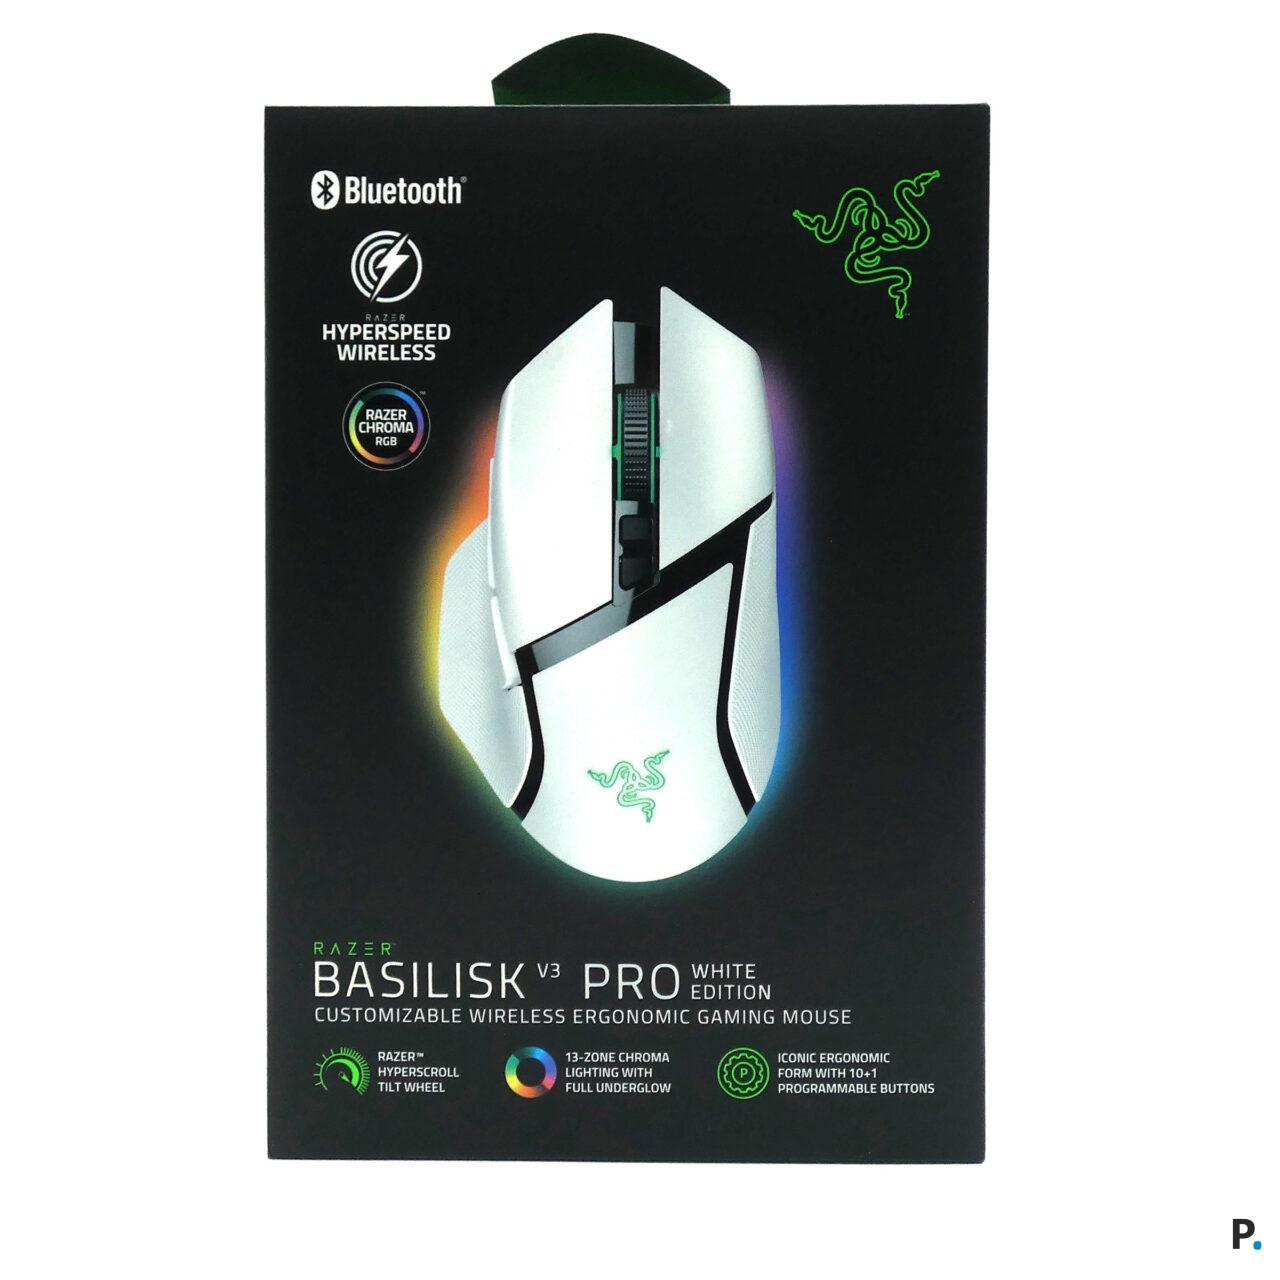 Razer Basilisk V3 PRO Review